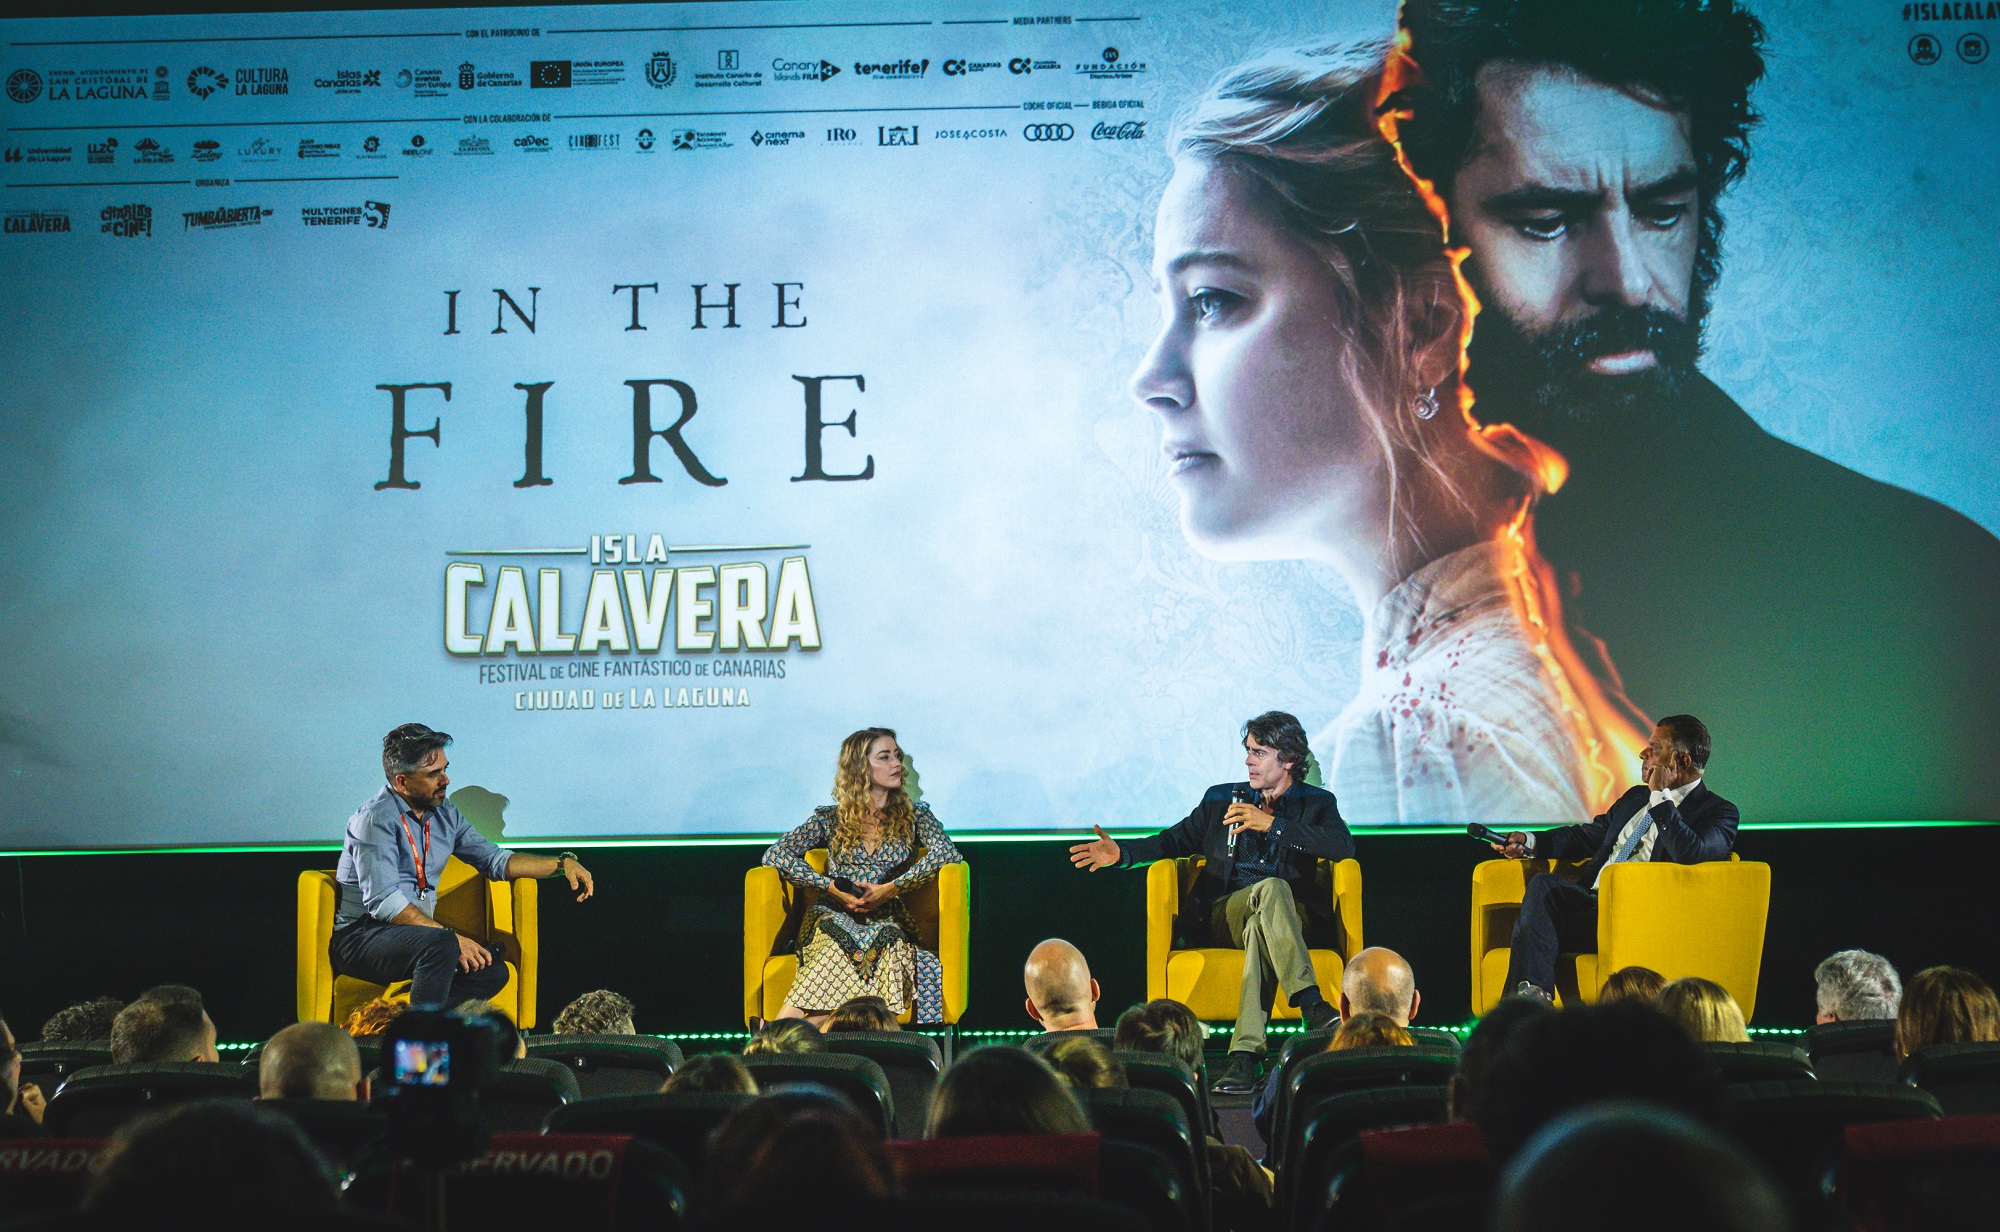 Ramón González Truijllo moderó el coloquio tras la proyección de In the Fire, con la participación de Amber Heard, Eduardo Noriega y Pascal Borno.